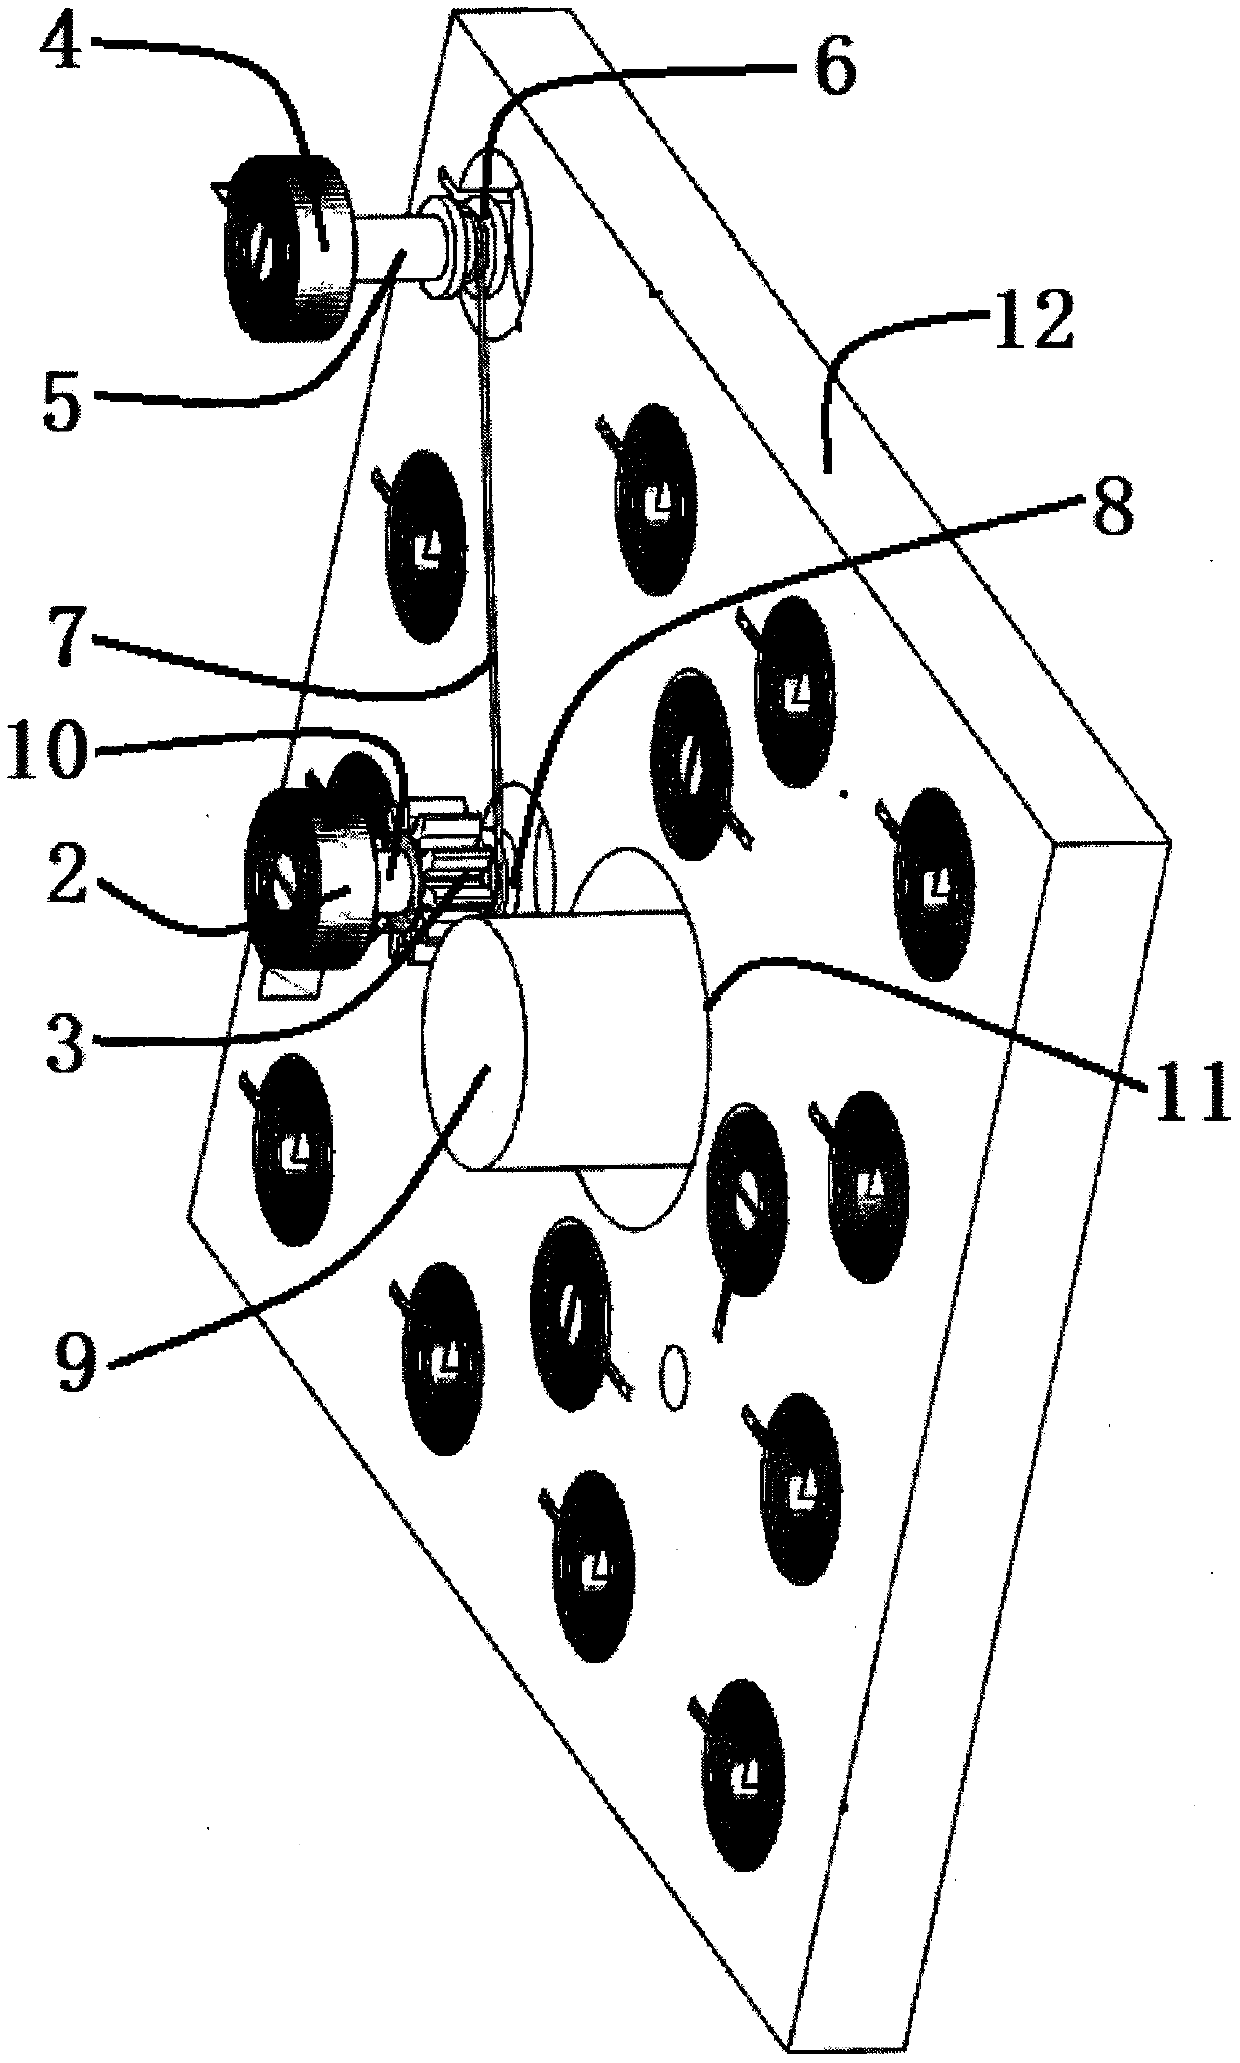 Elastic mechanism capable of expanding number of parallel clockwork springs